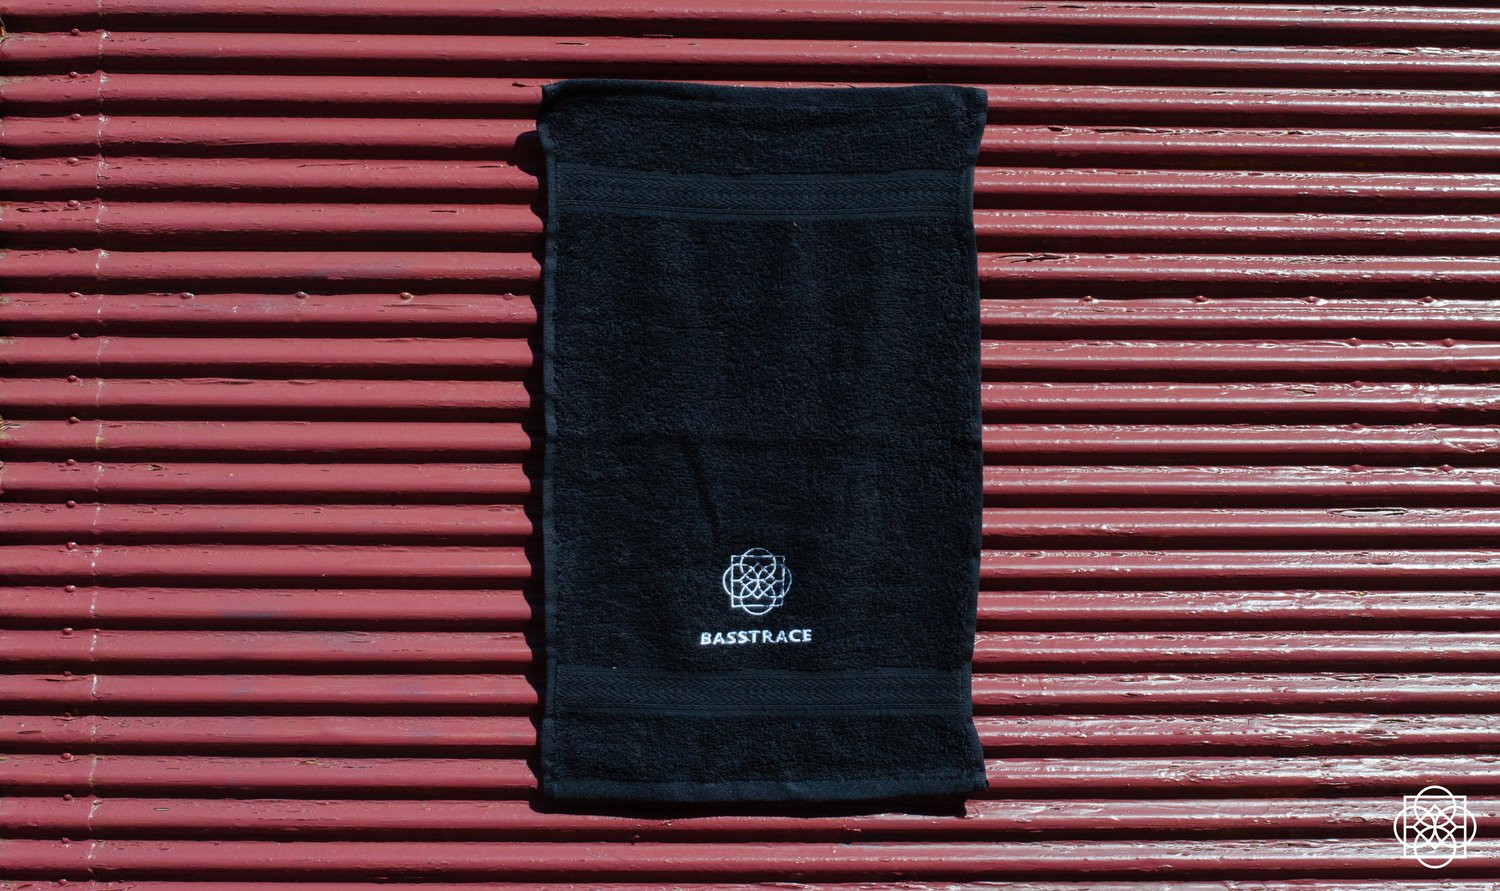 Basstrace Towel